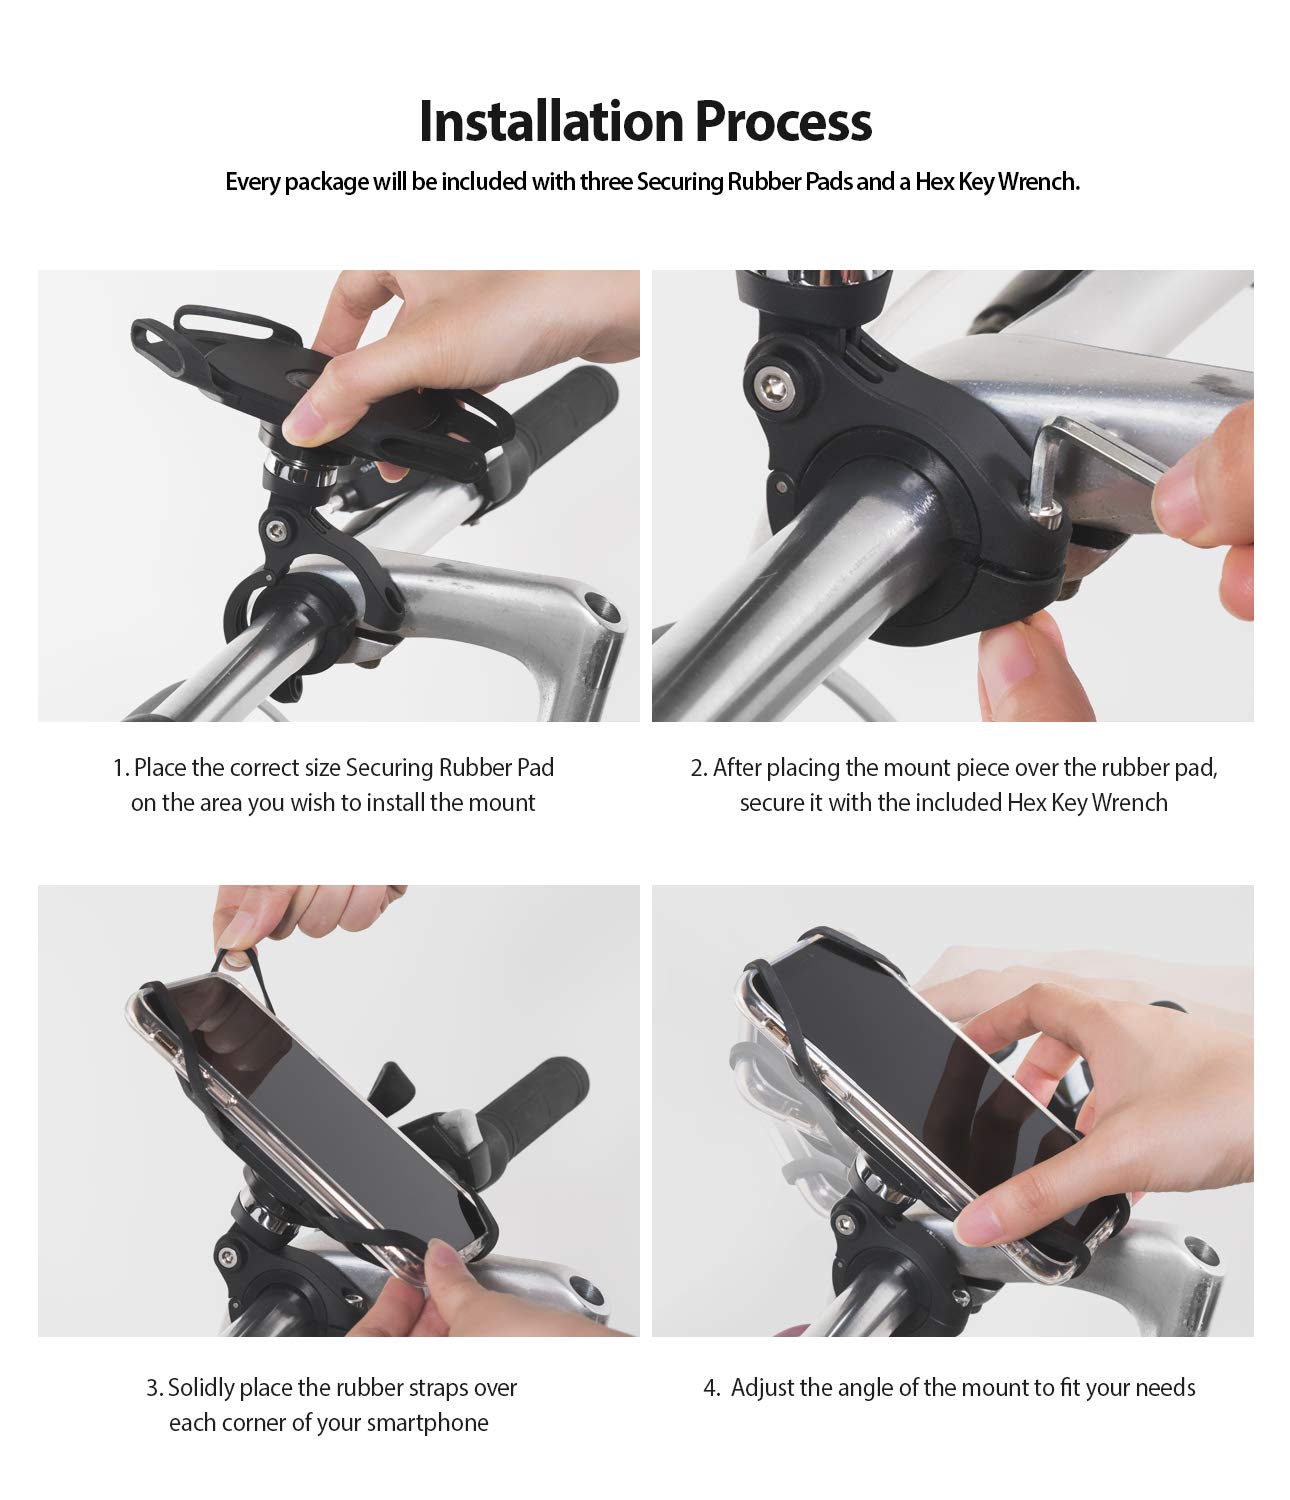 ringke spider grip bike mount with secure elastic bands - installation process